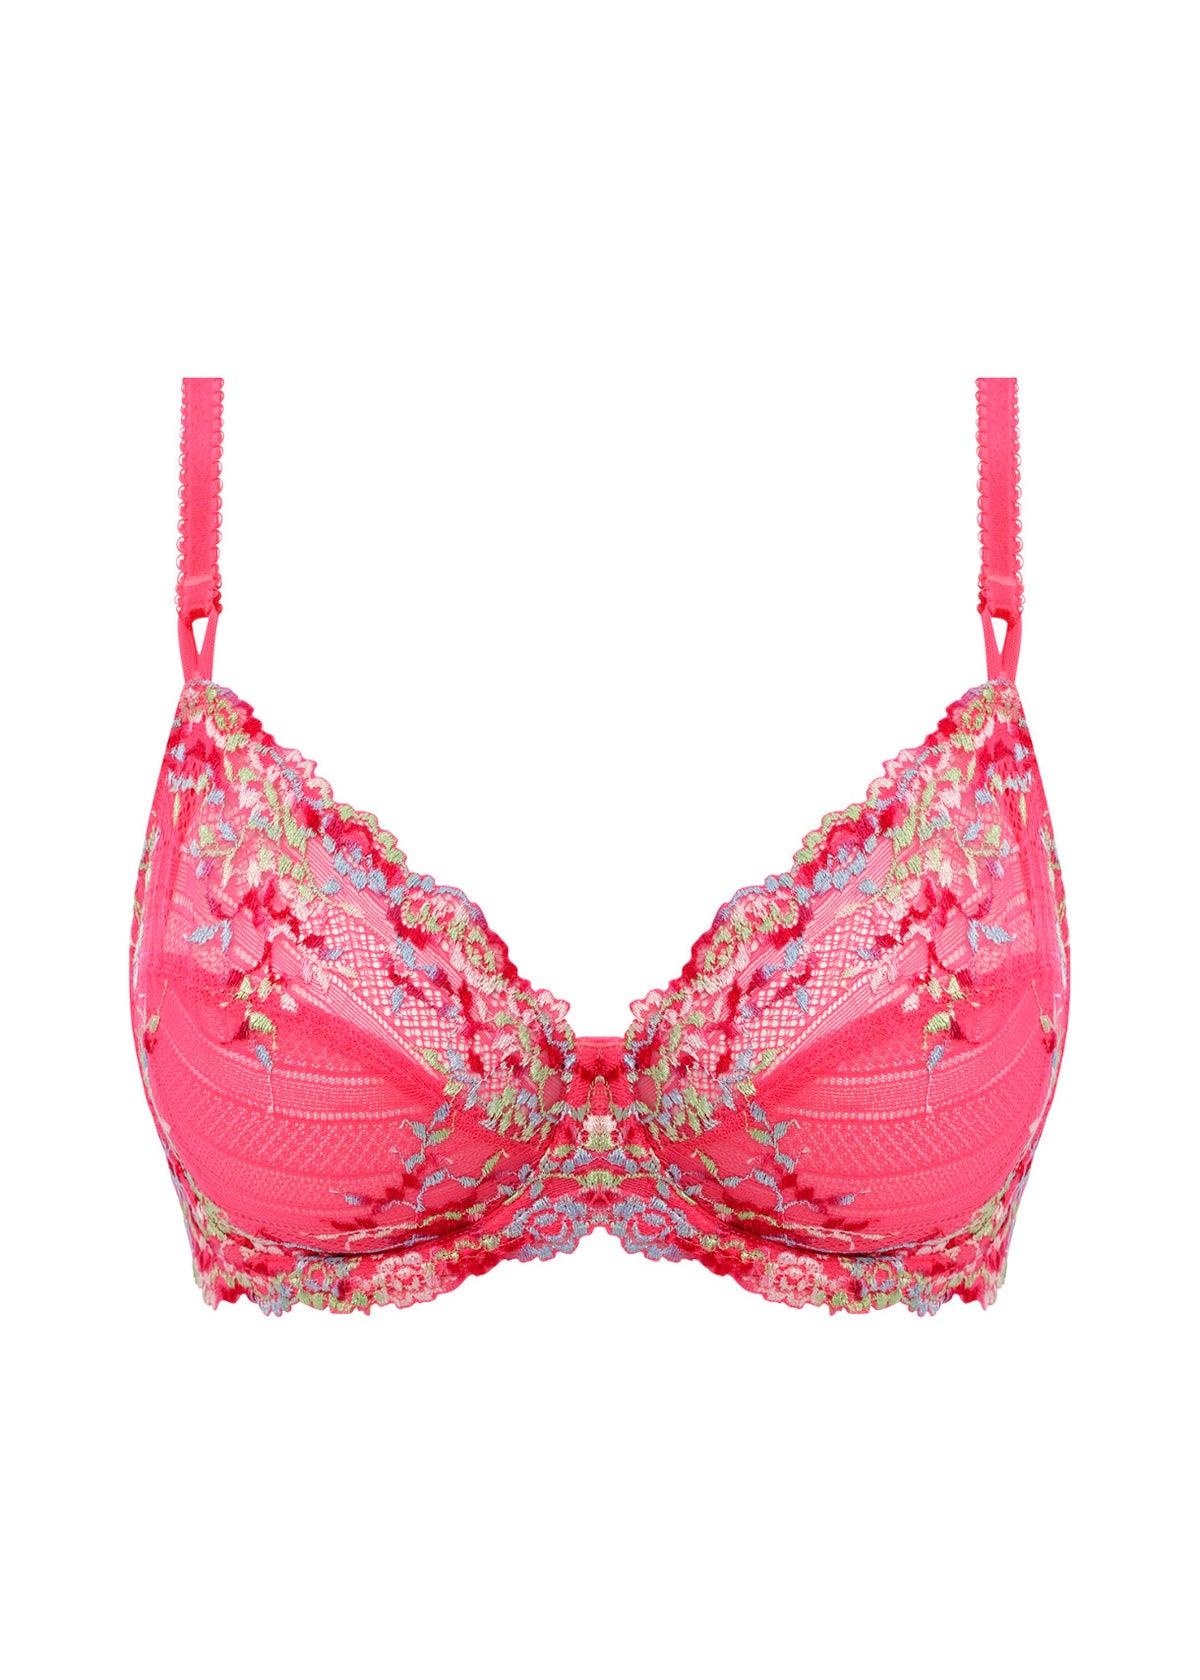 Wacoal Embrace Lace Underwired Bra - Hot Pink / Multi